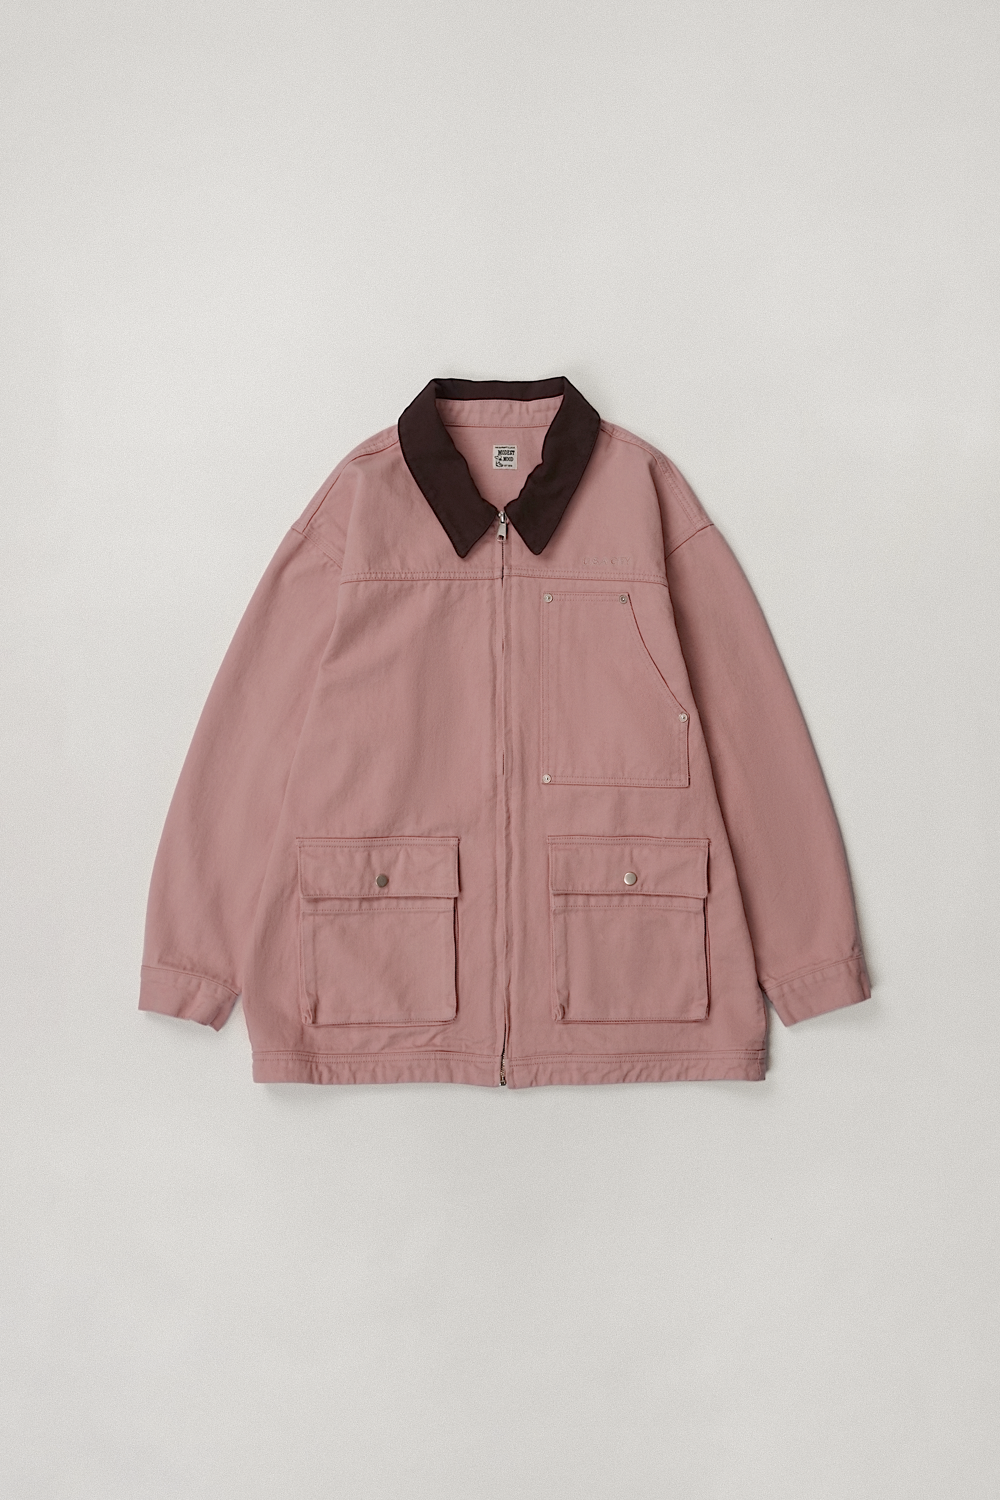 City Jacket (Pink)